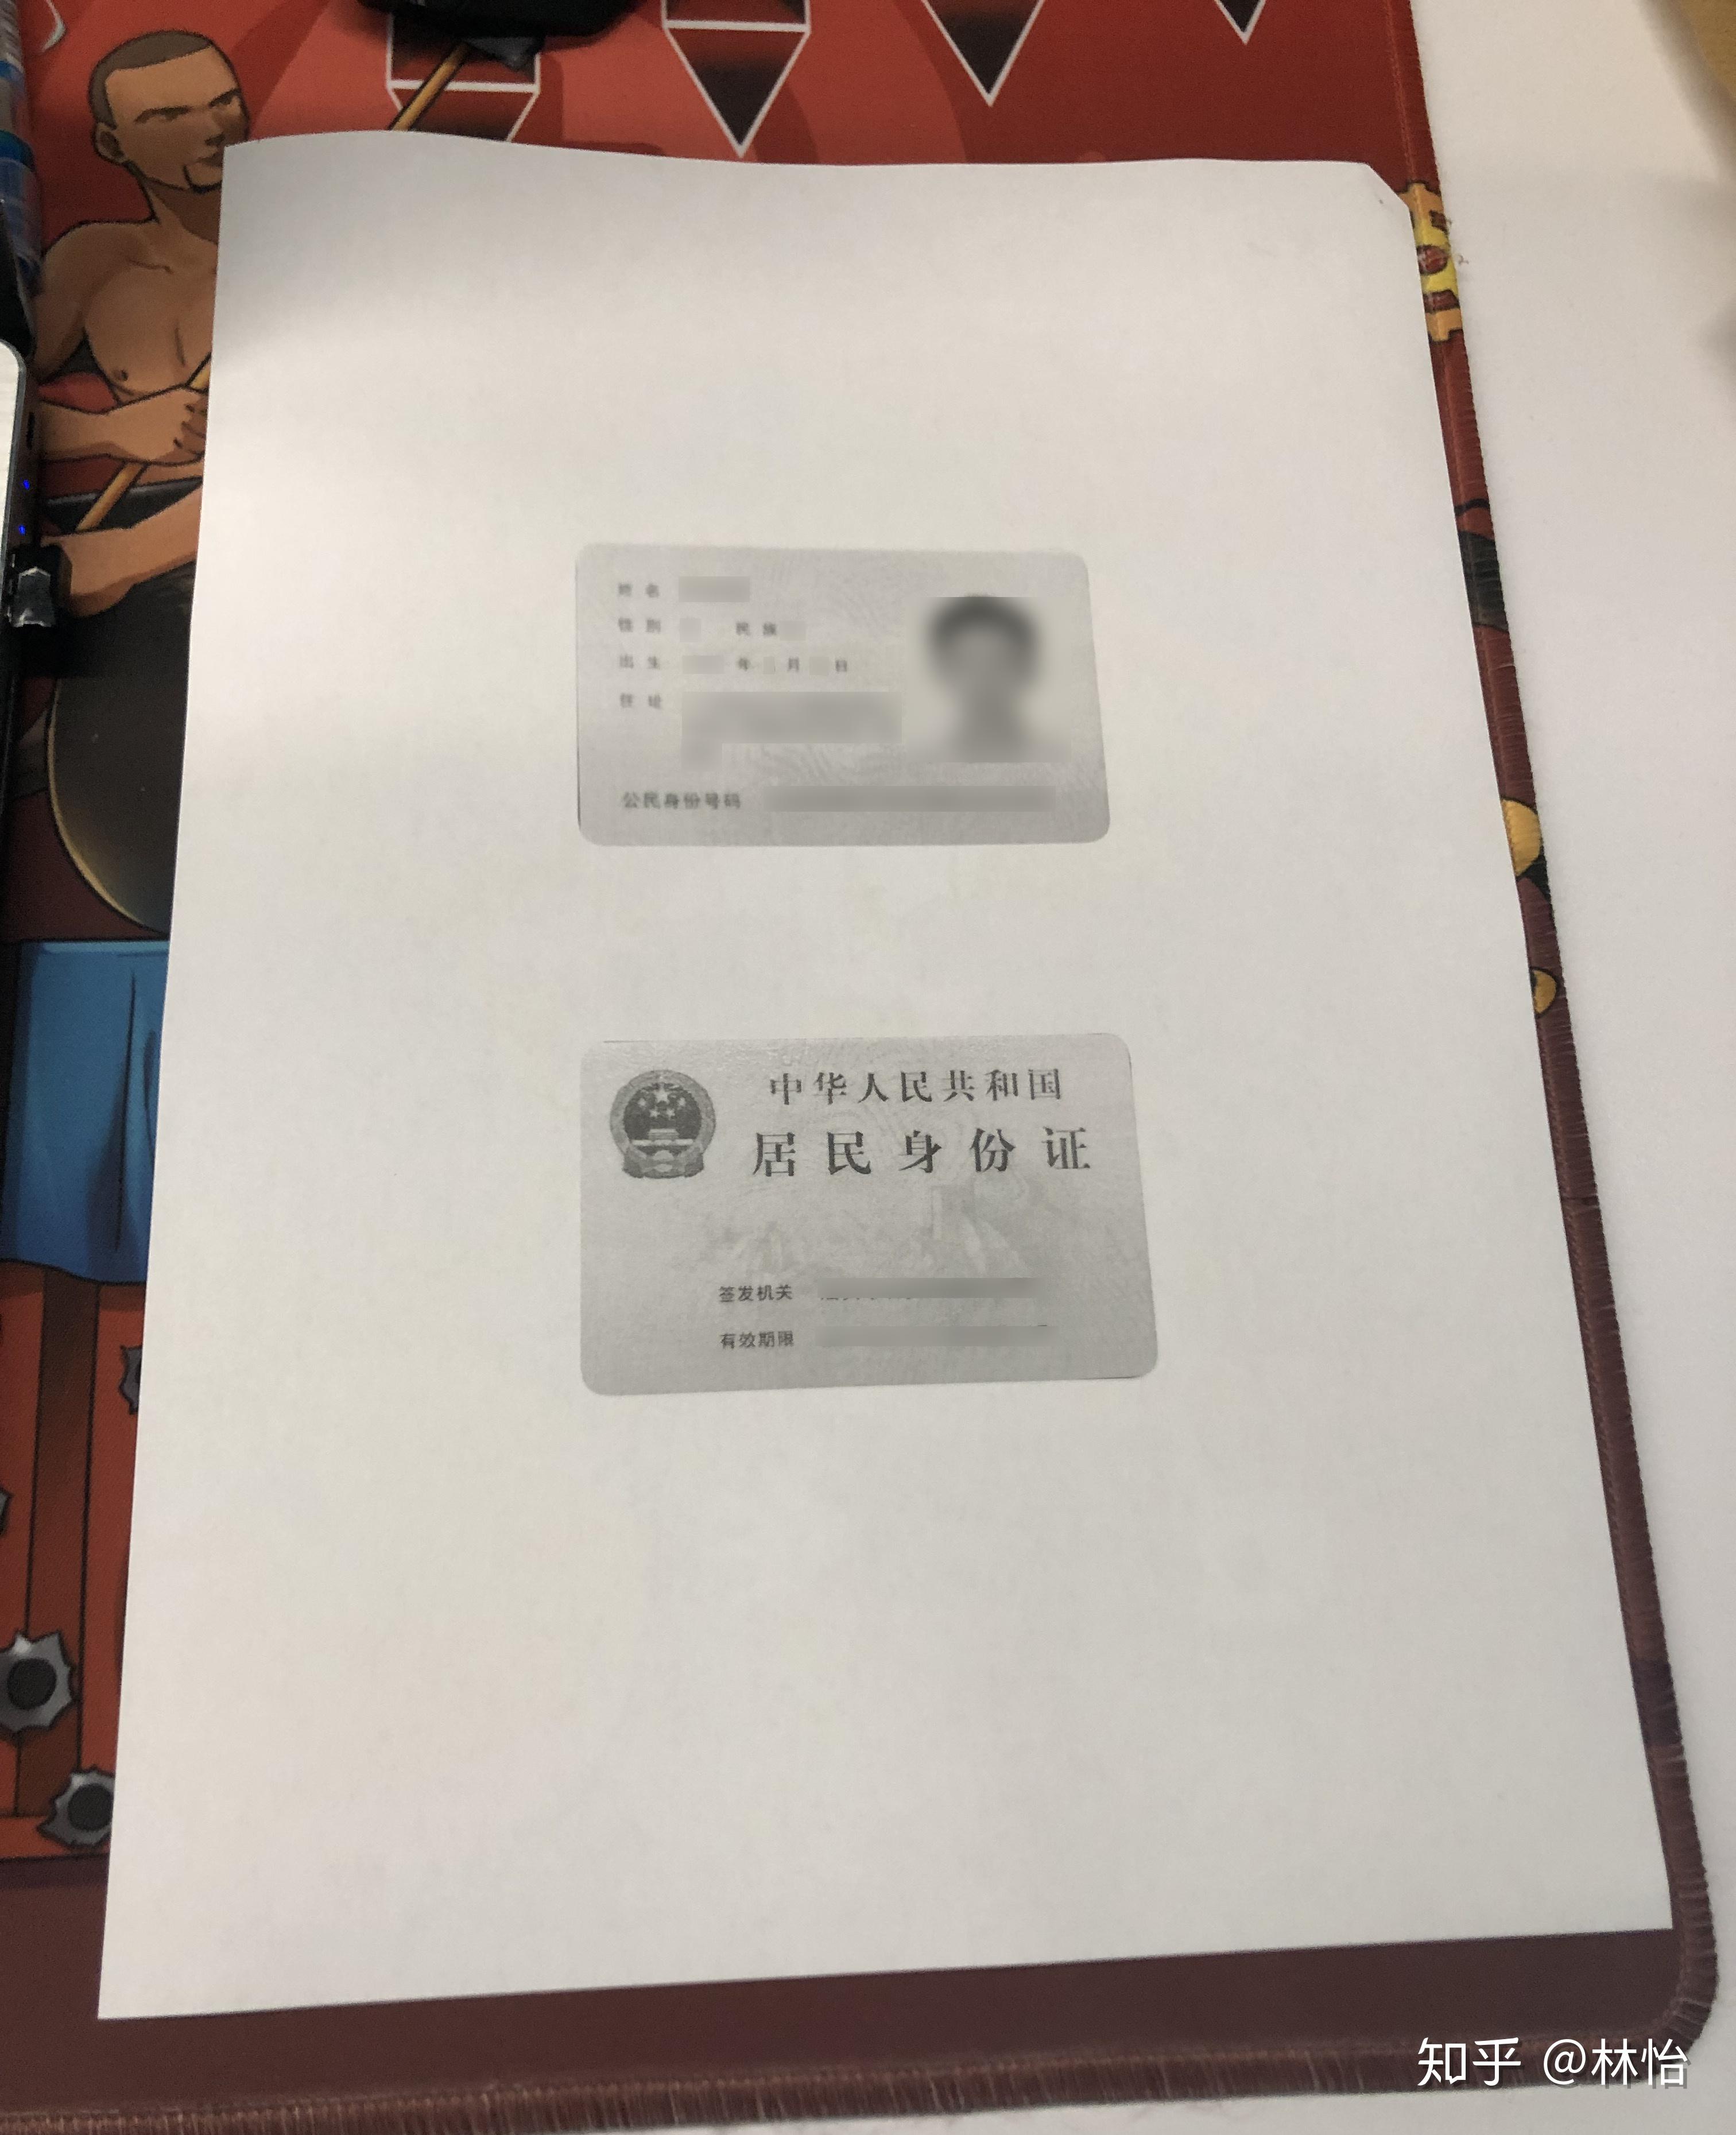 TextIn - 在线免费体验中心 - 香港身份证识别